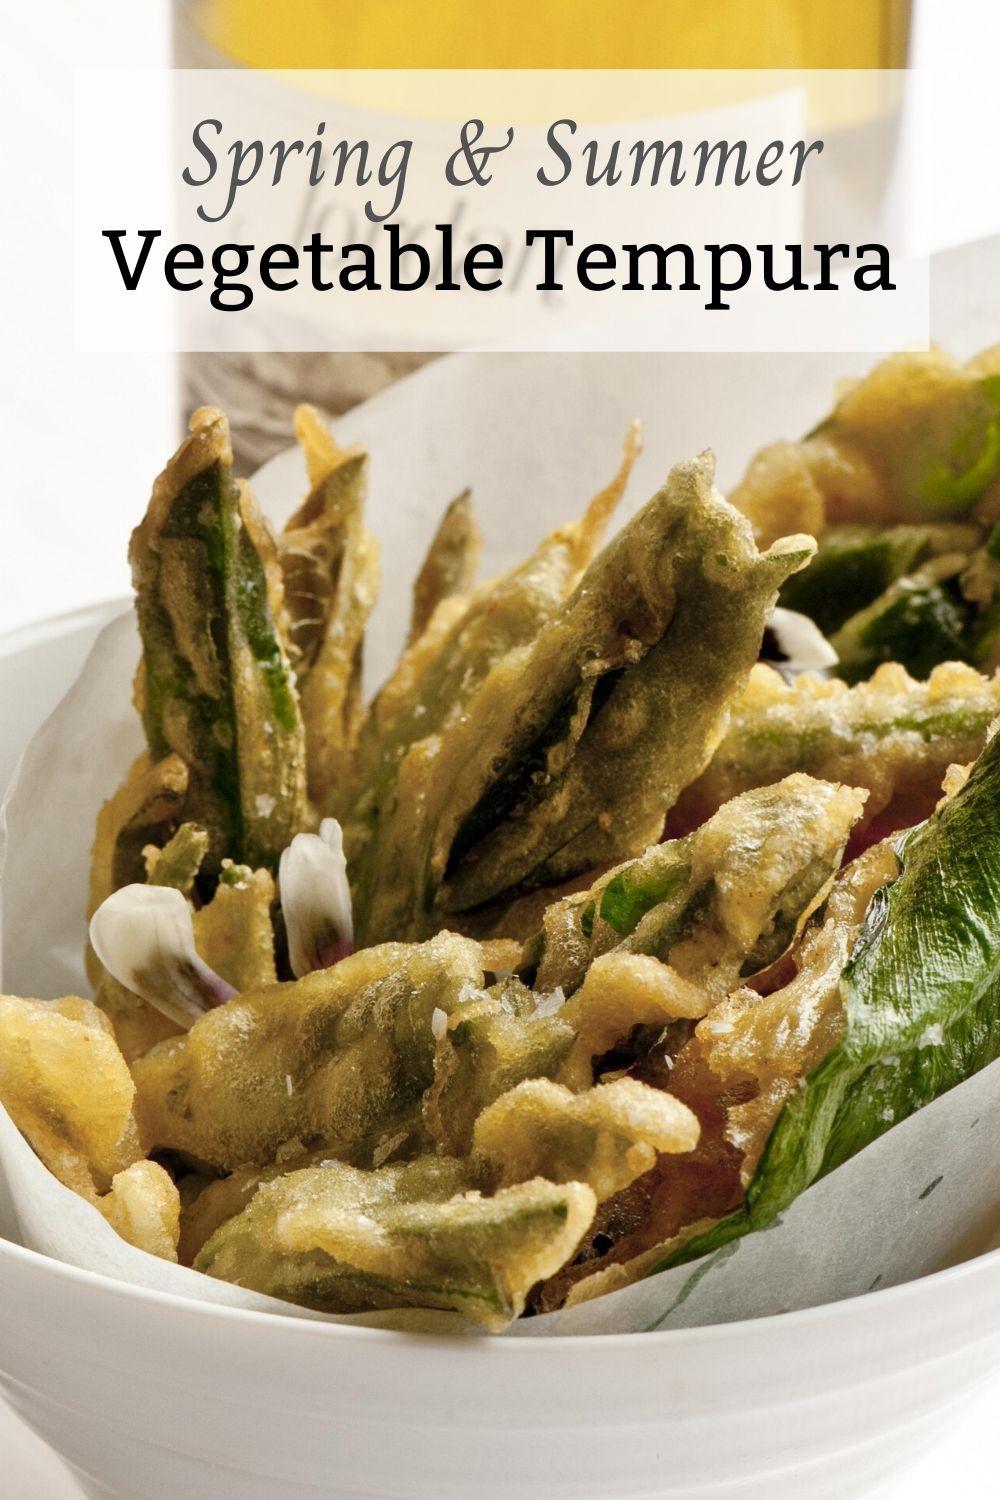 Spring & Summer Vegetable Tempura